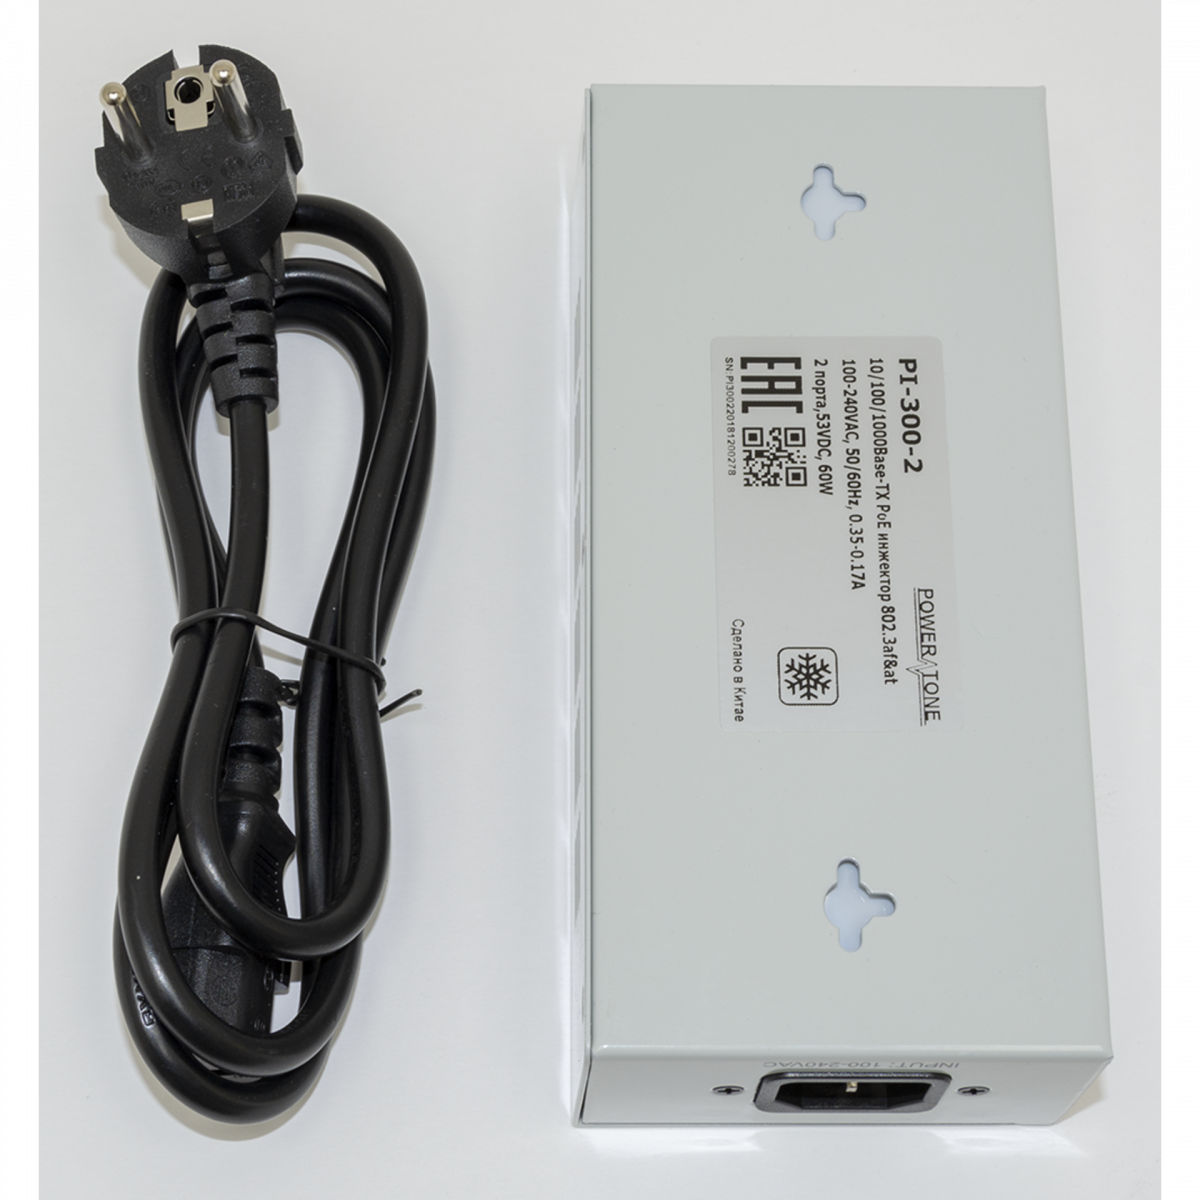 PoE инжектор неуправляемый PI-300-2, 2x10/100/1000BASE-T 802.3af&at, PoE бюджет 60Вт